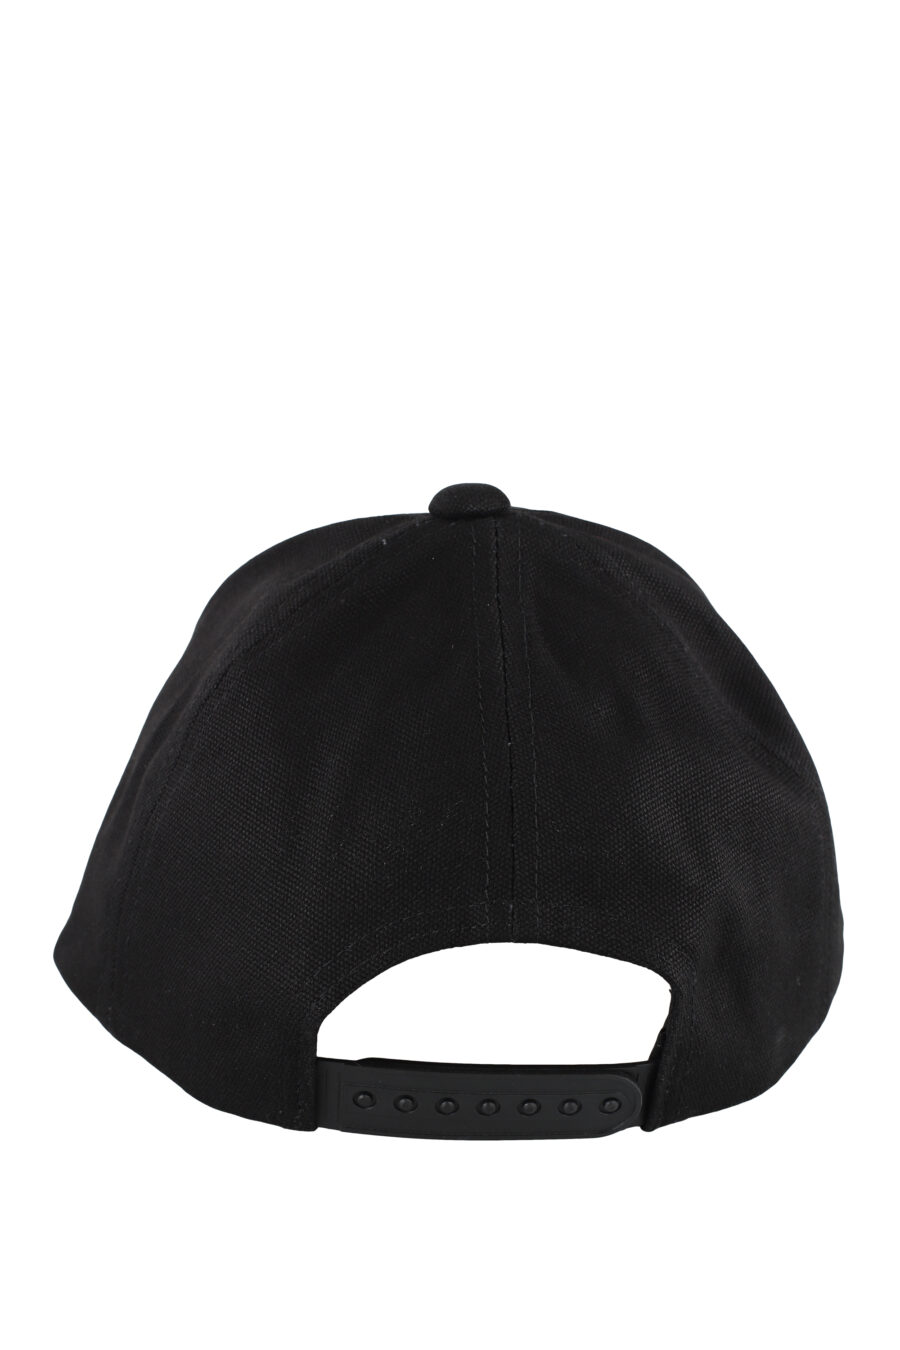 Gorra negra con logo "lux identity" dorado - IMG 5175